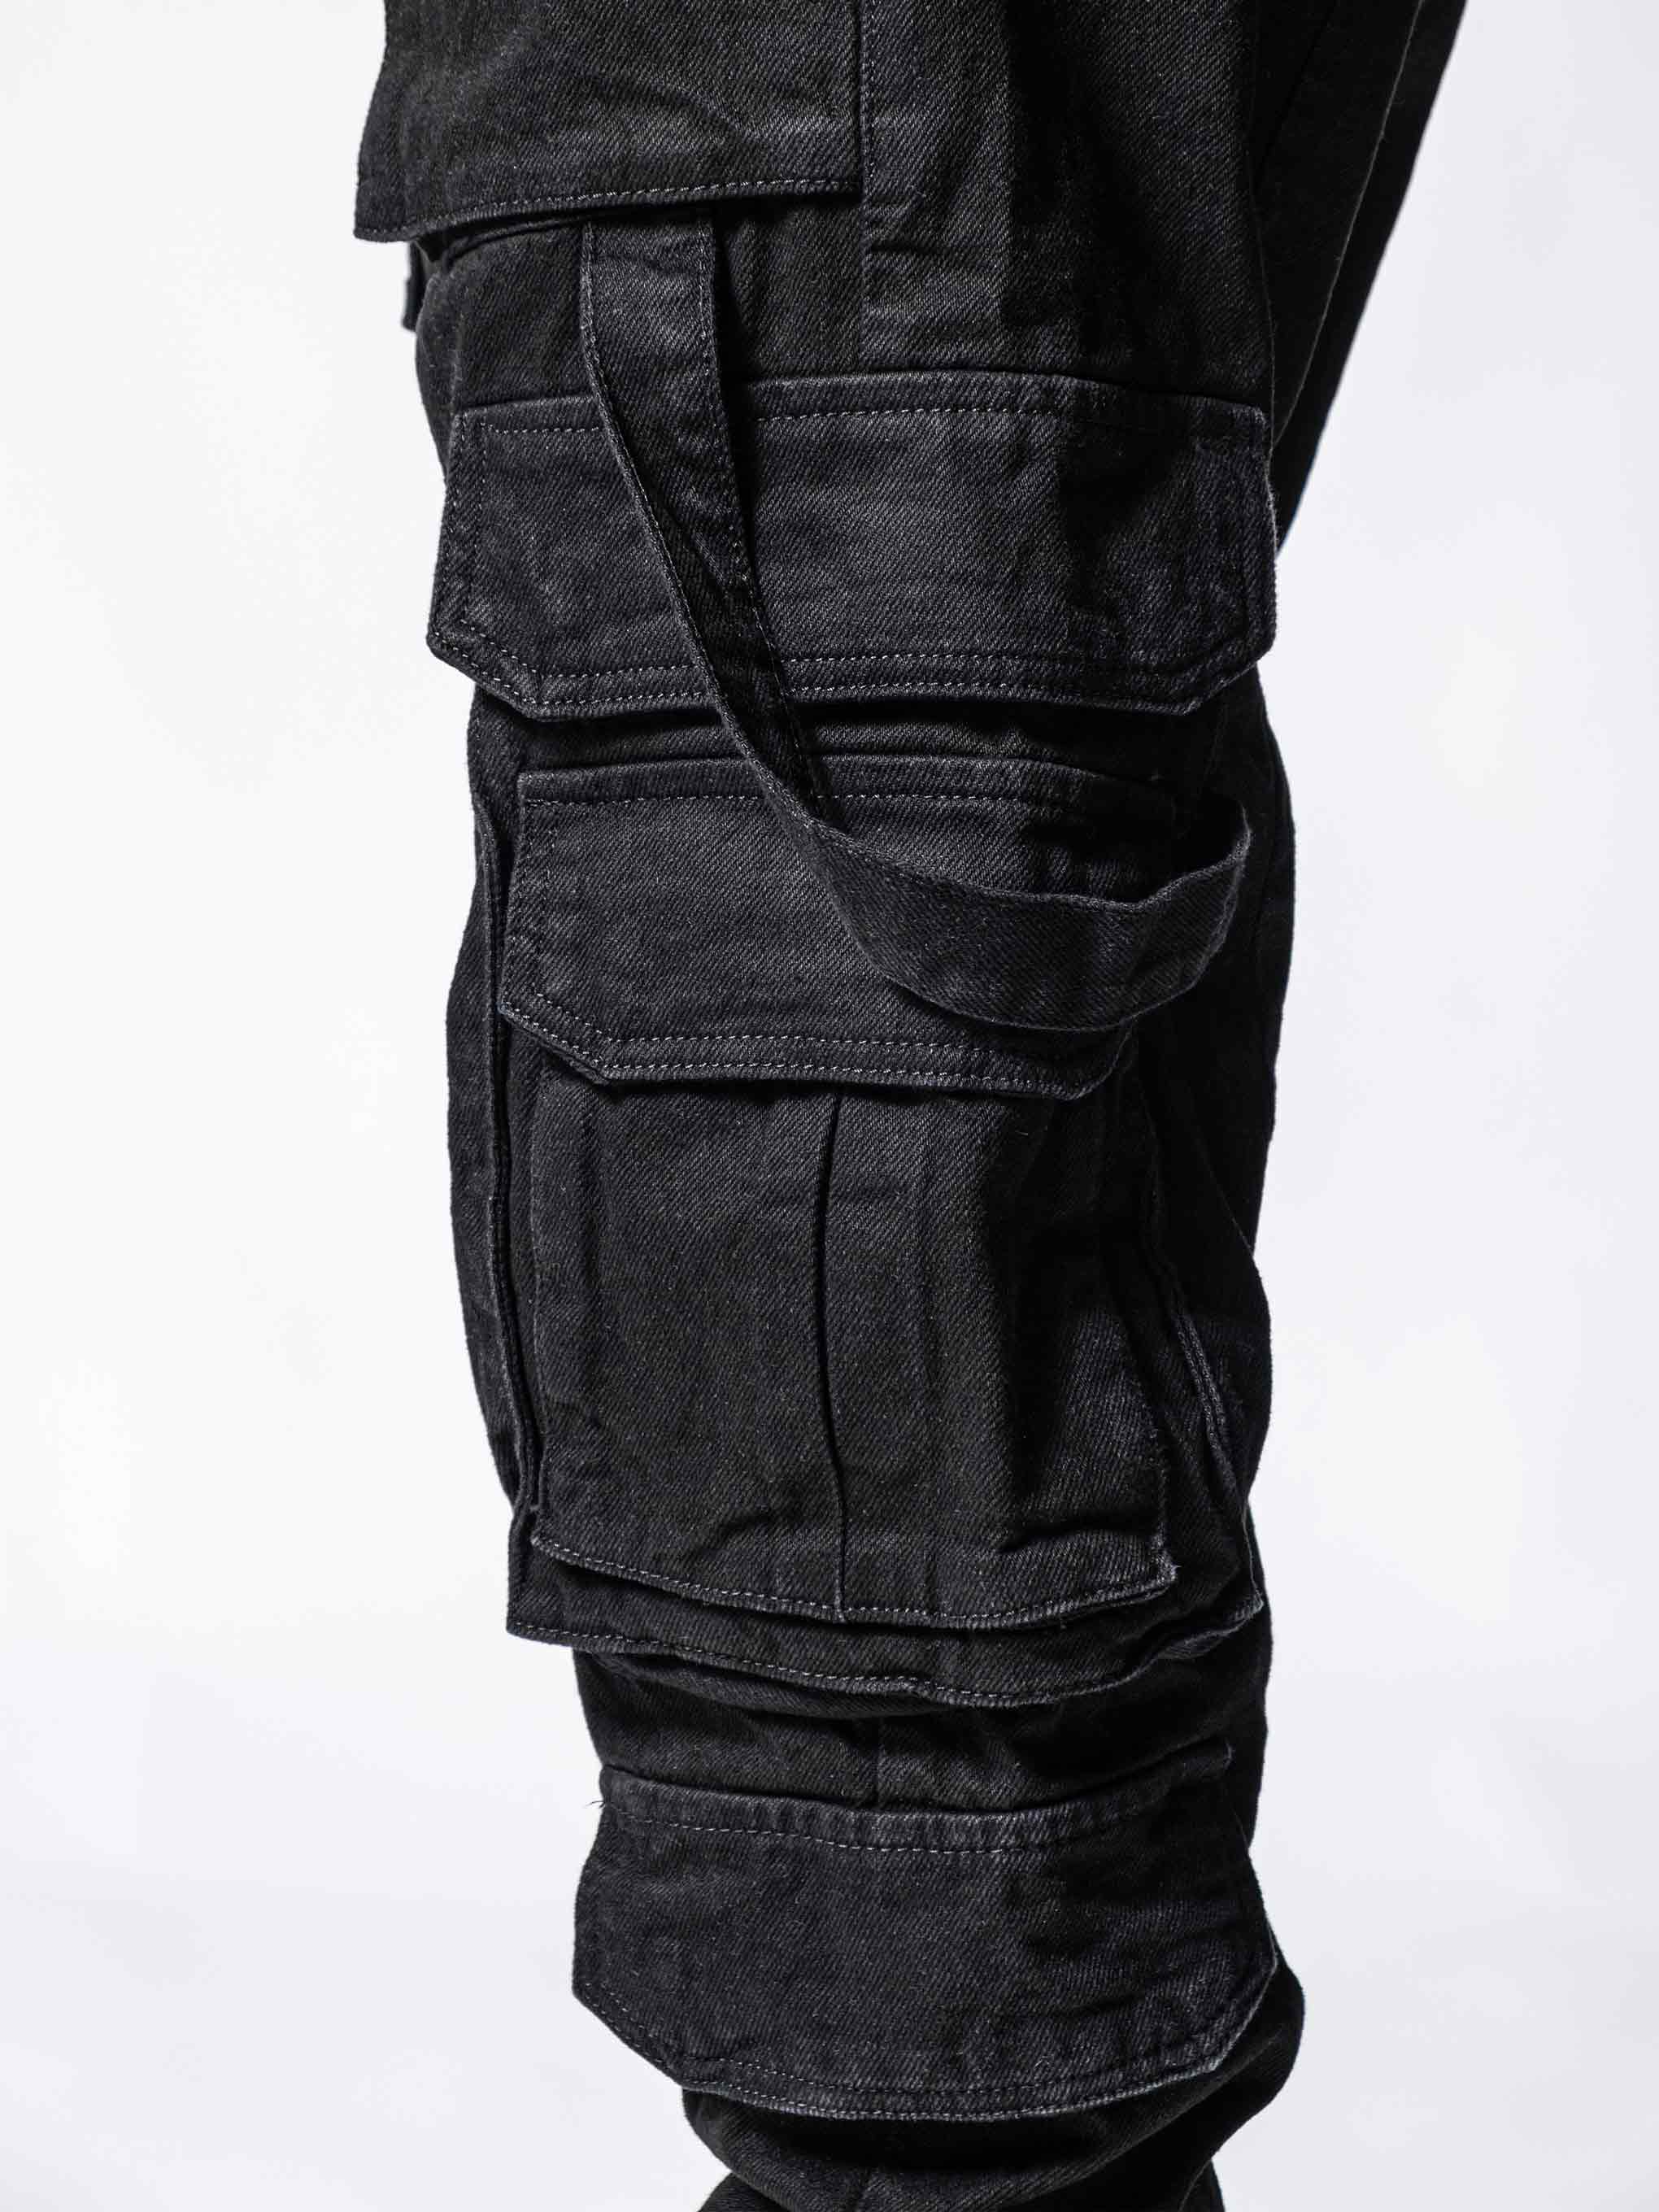 Casual Black Cargo Pants – Monocloth